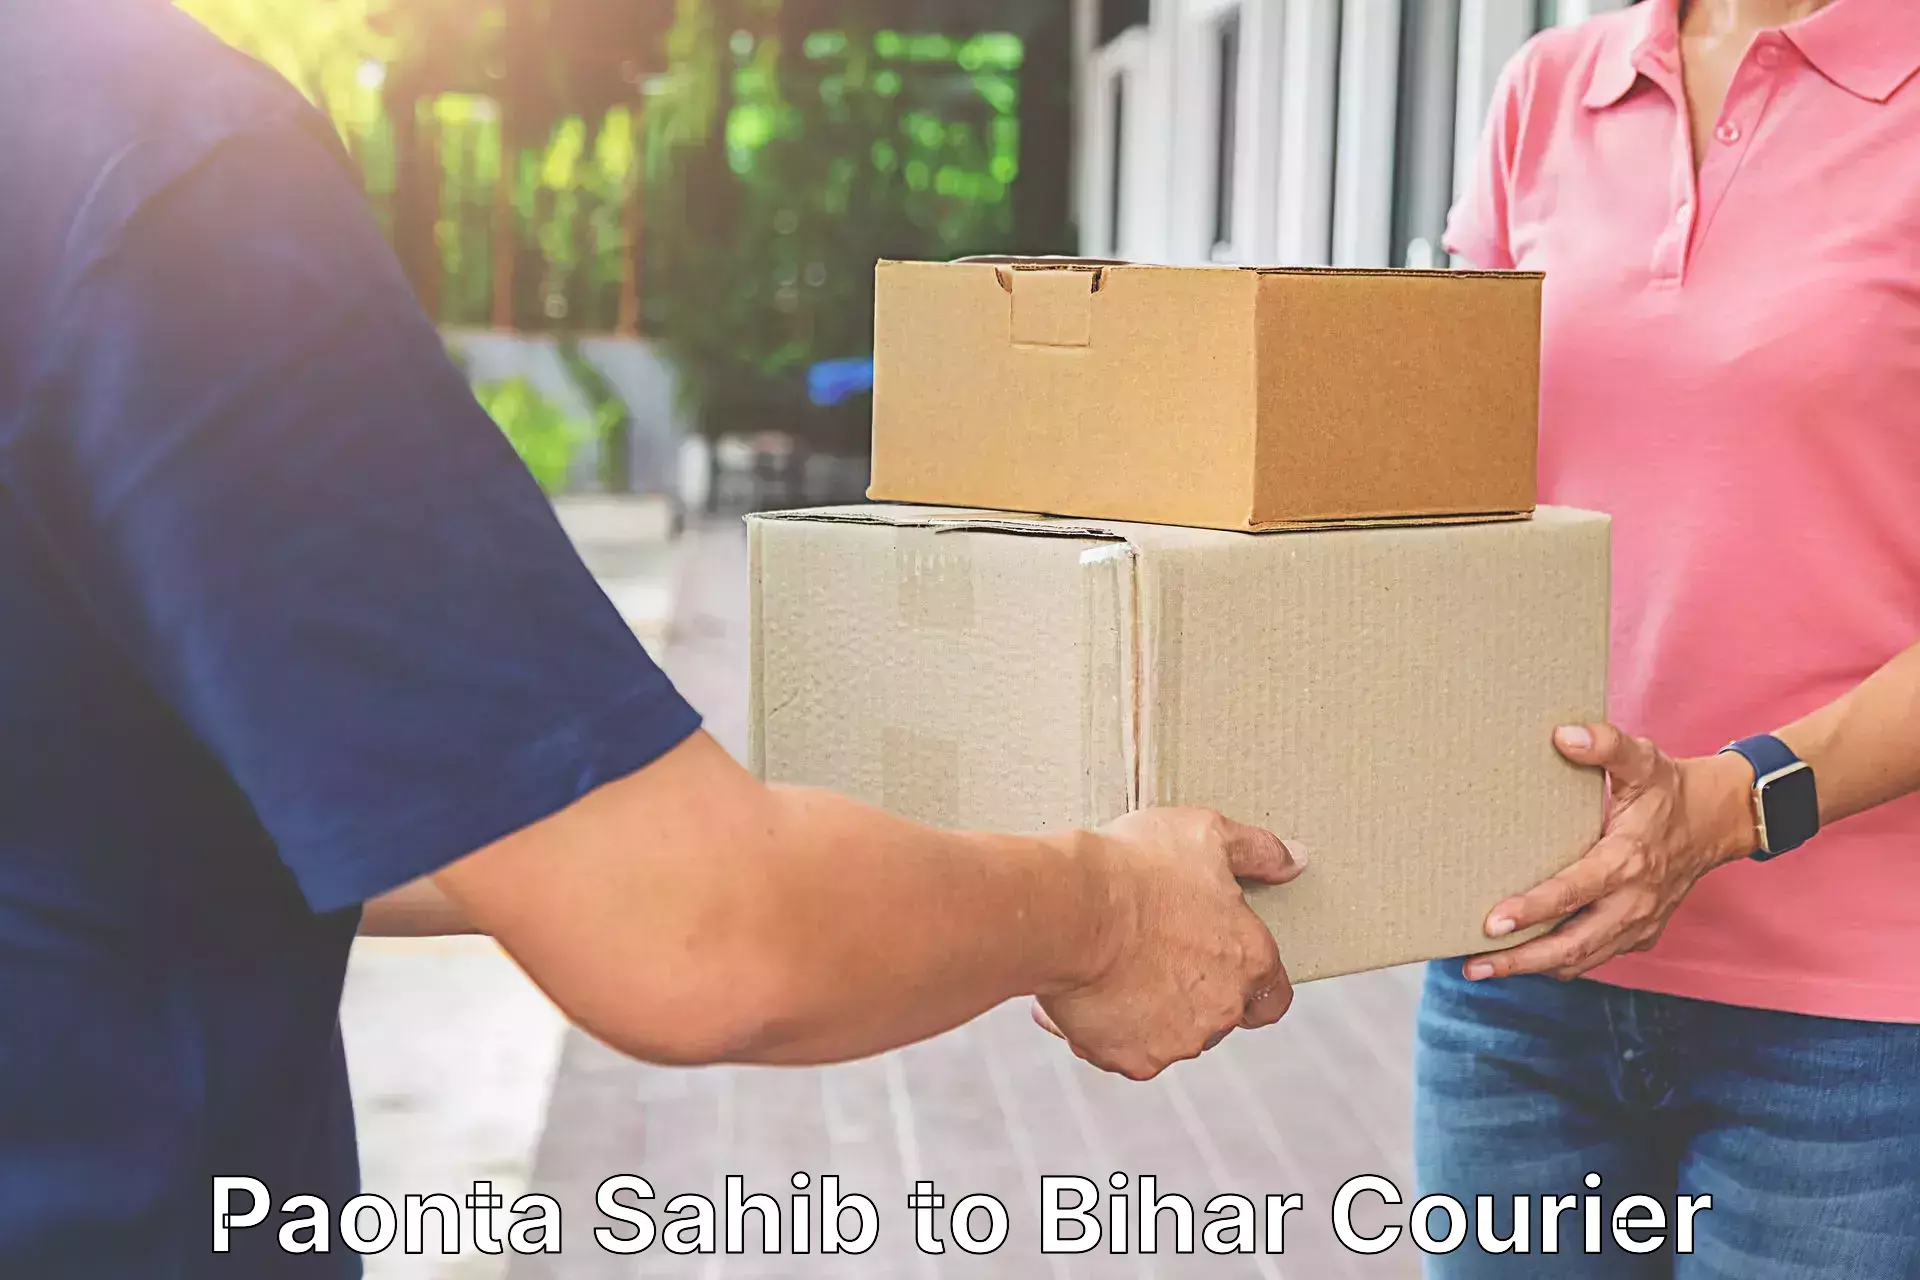 Courier service comparison Paonta Sahib to Jagdishpur Bhojpur